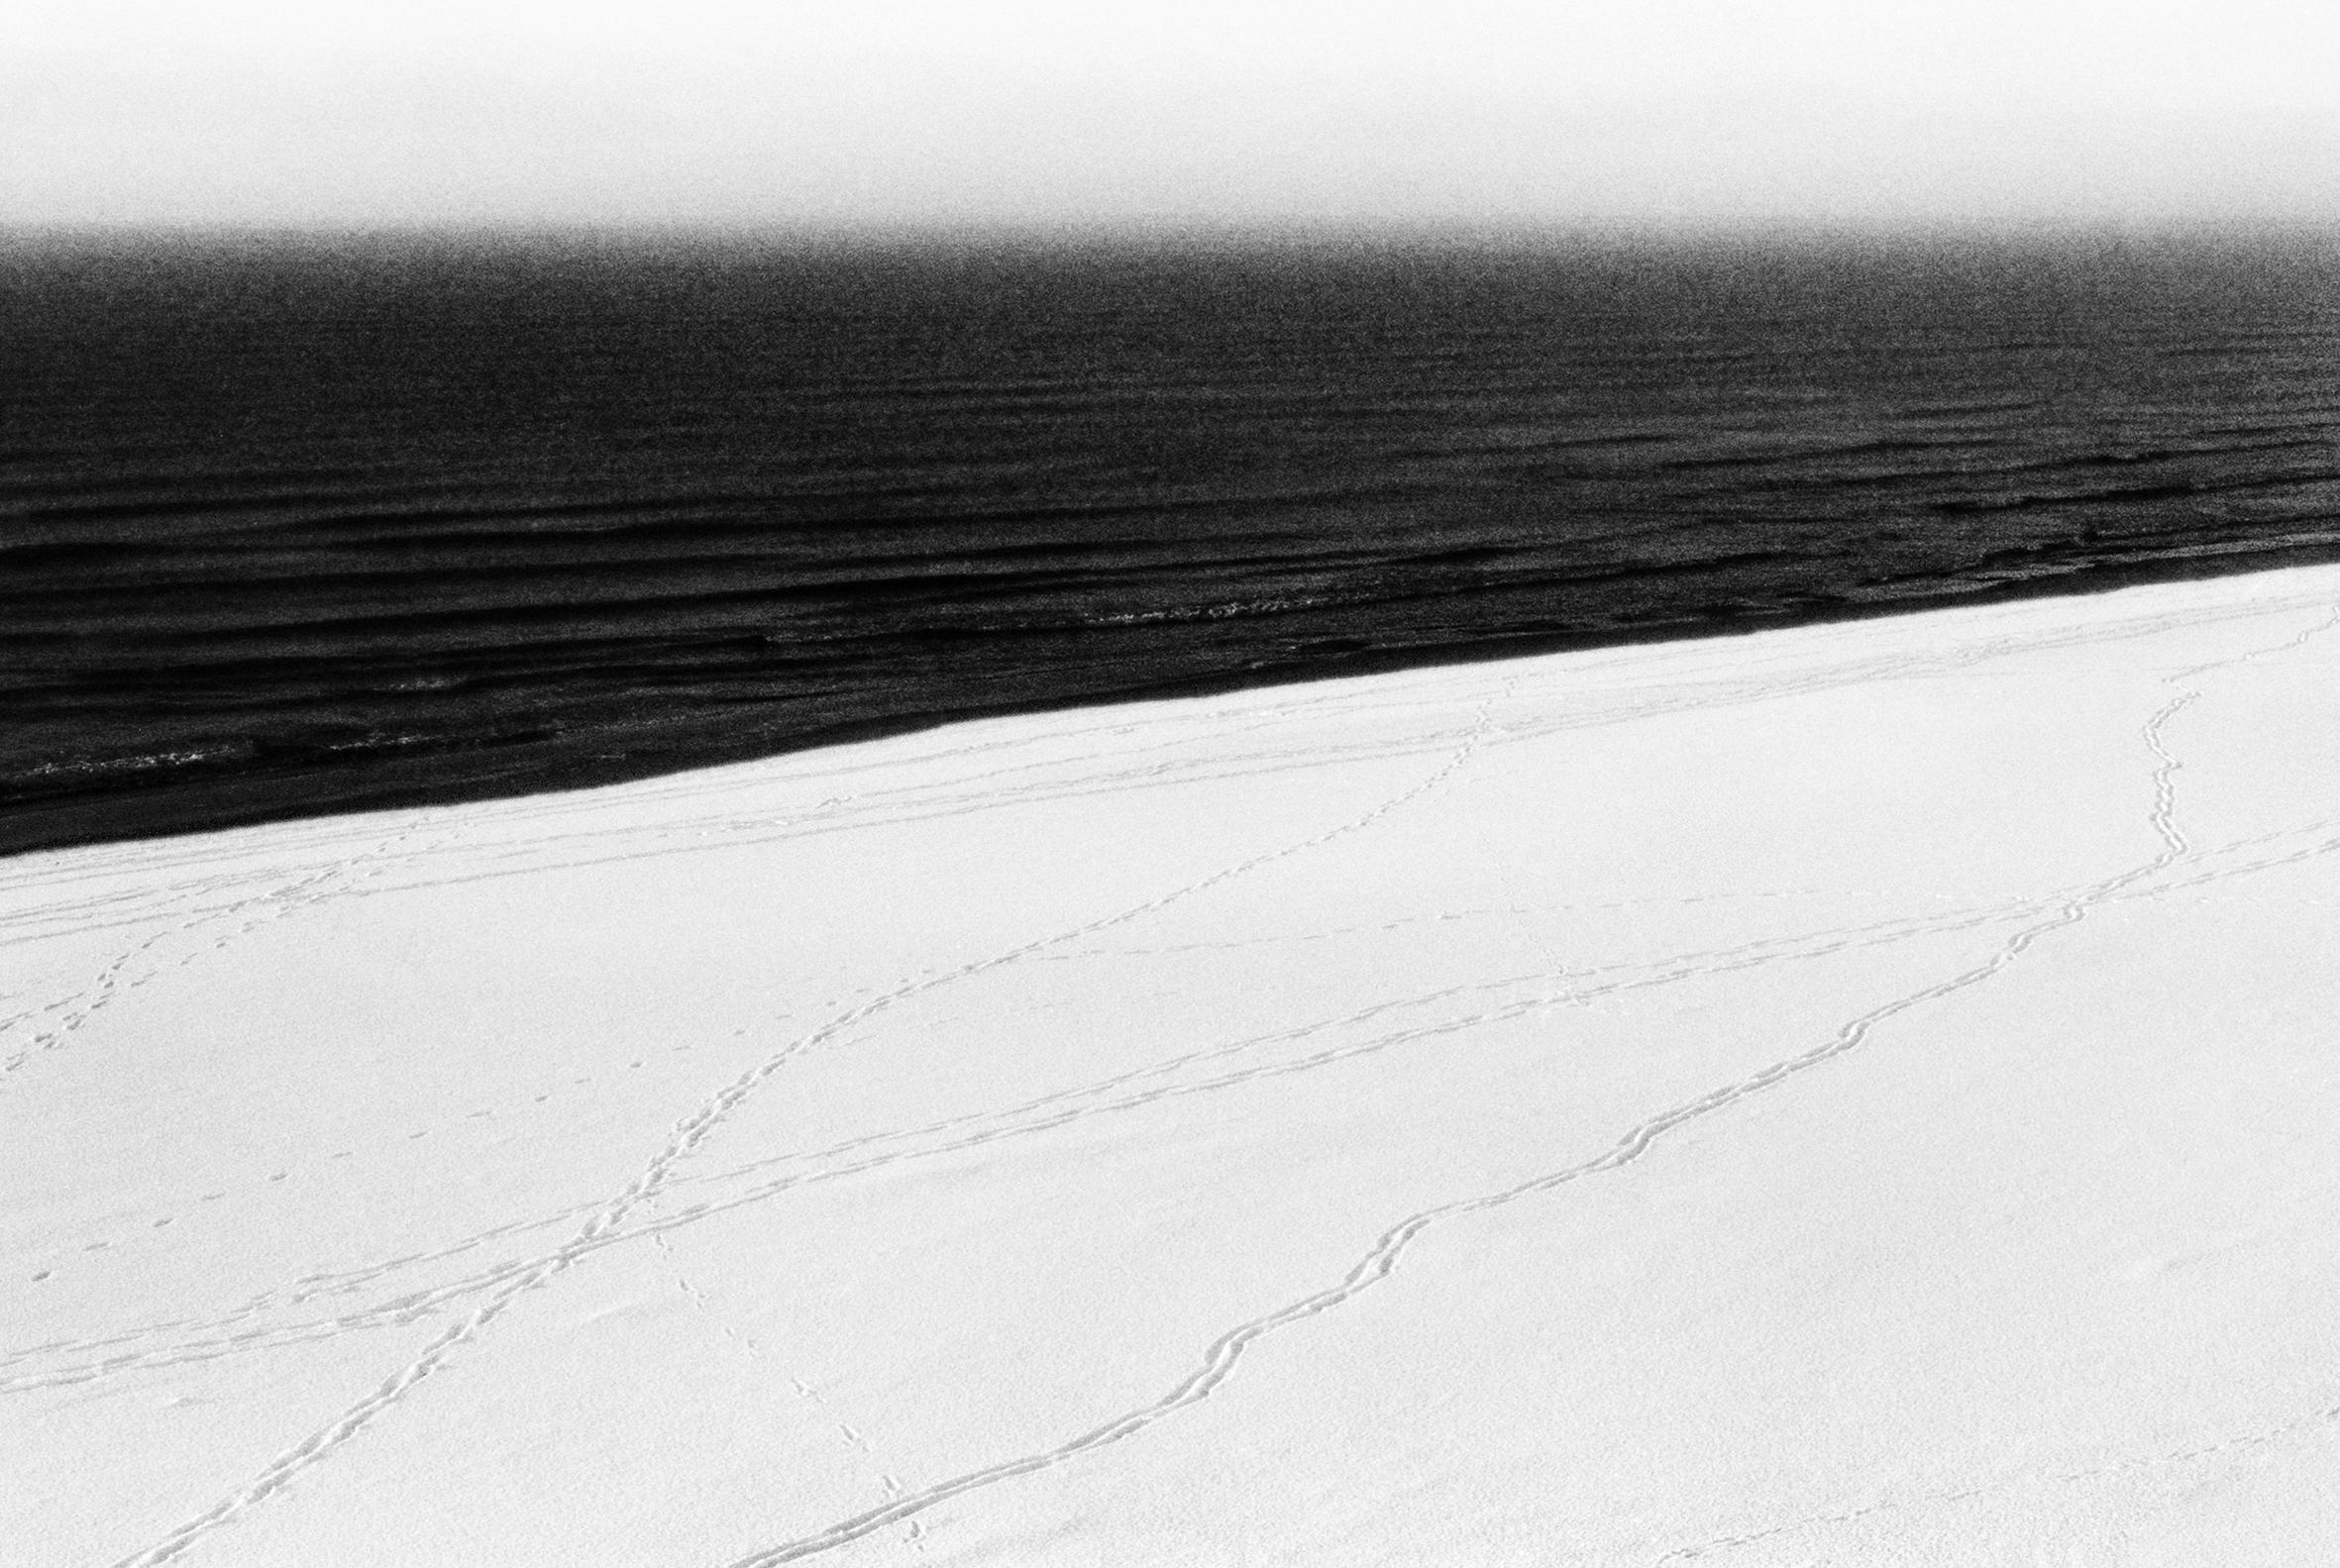 Ugne Pouwell Landscape Photograph - 'Baltic freeze' - black and white analogue landscape photography 100 x 67 cm